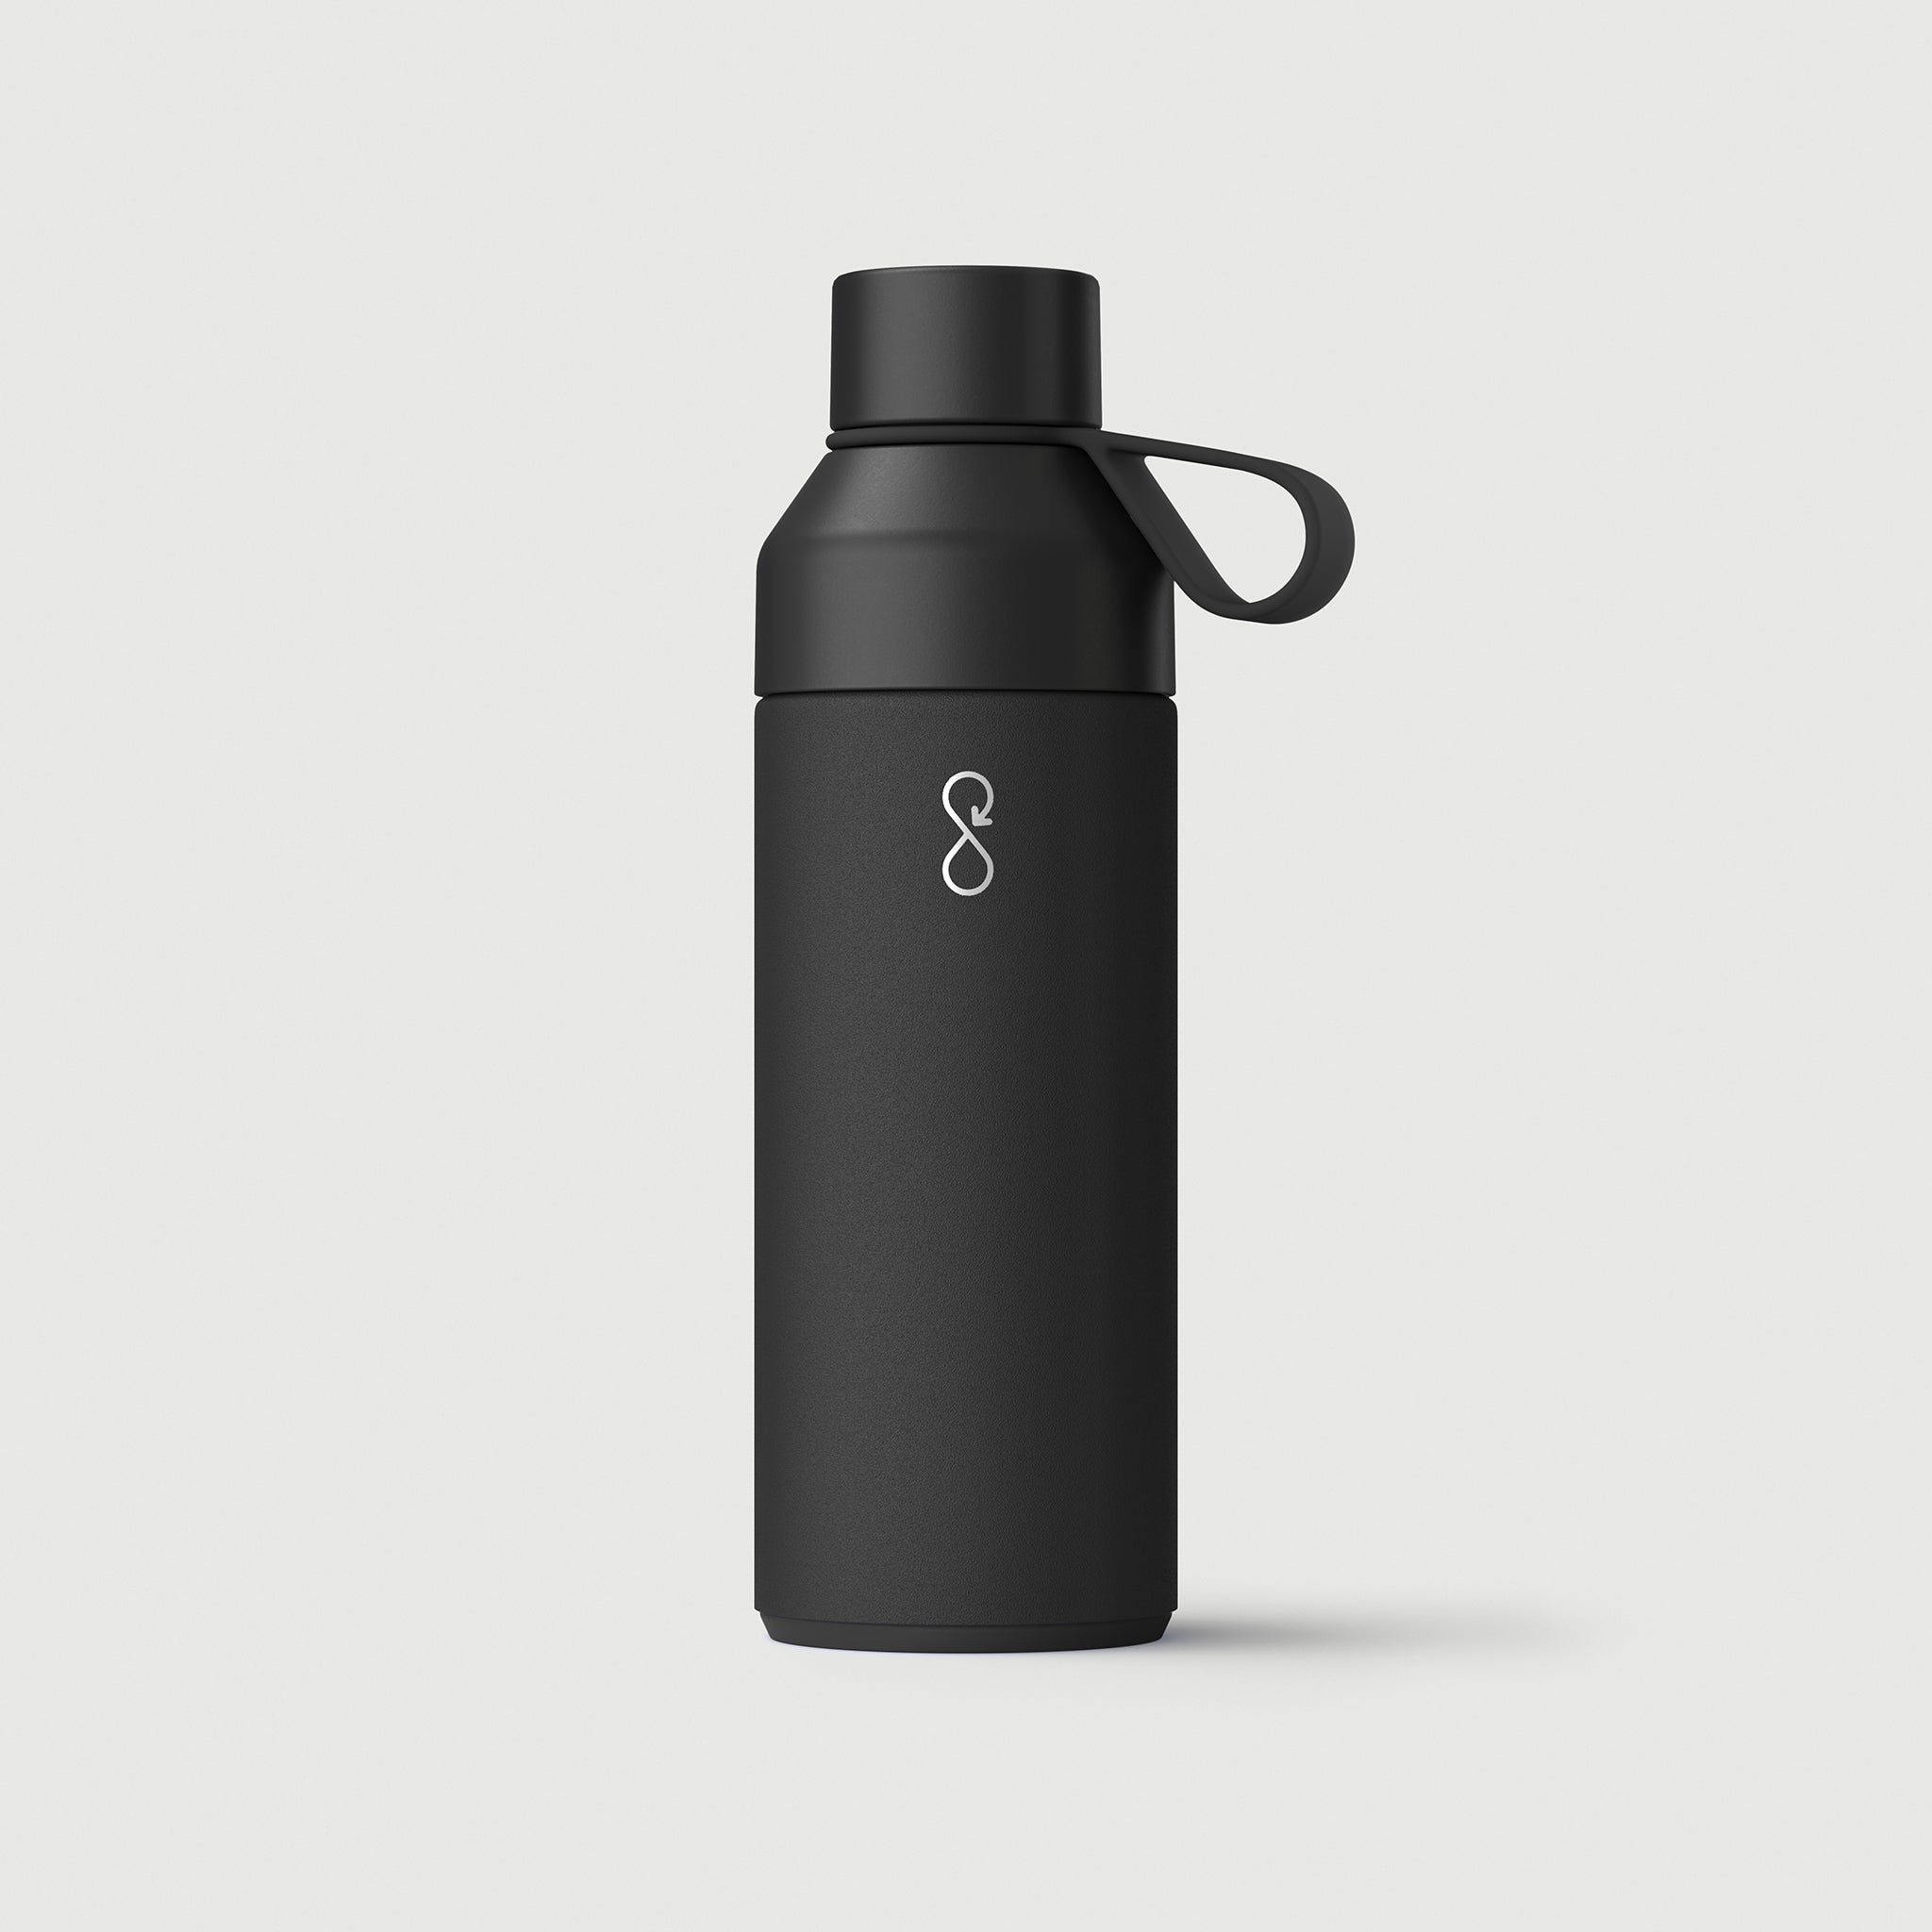 Product picture of Ocean Bottle - Obsidian Black (500ml)